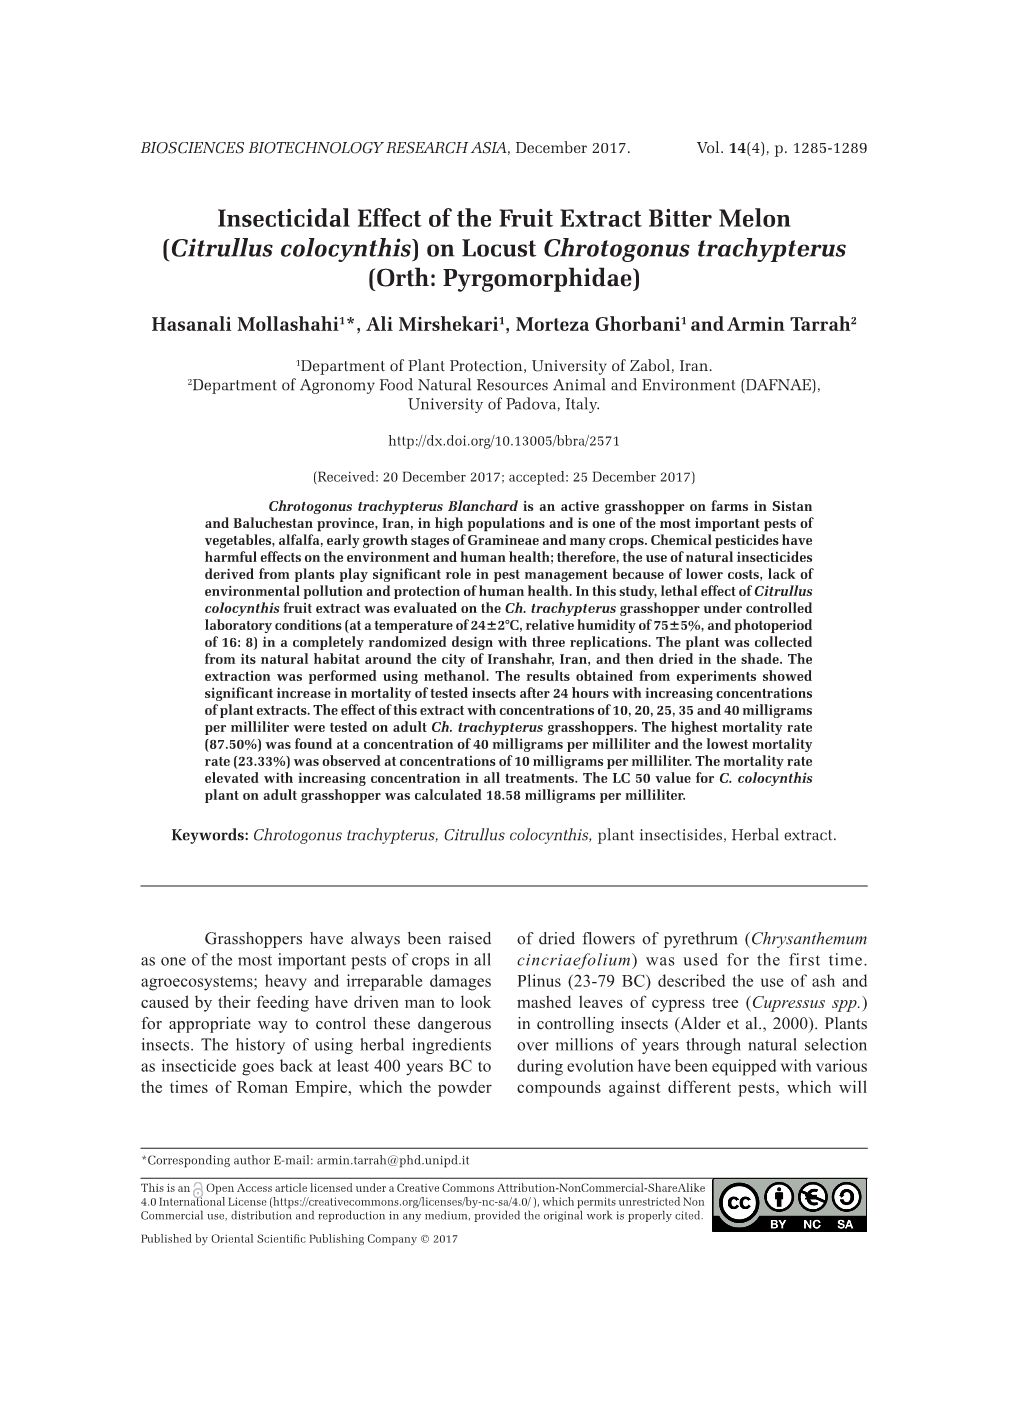 Insecticidal Effect of the Fruit Extract Bitter Melon (Citrullus Colocynthis) on Locust Chrotogonus Trachypterus (Orth: Pyrgomorphidae)